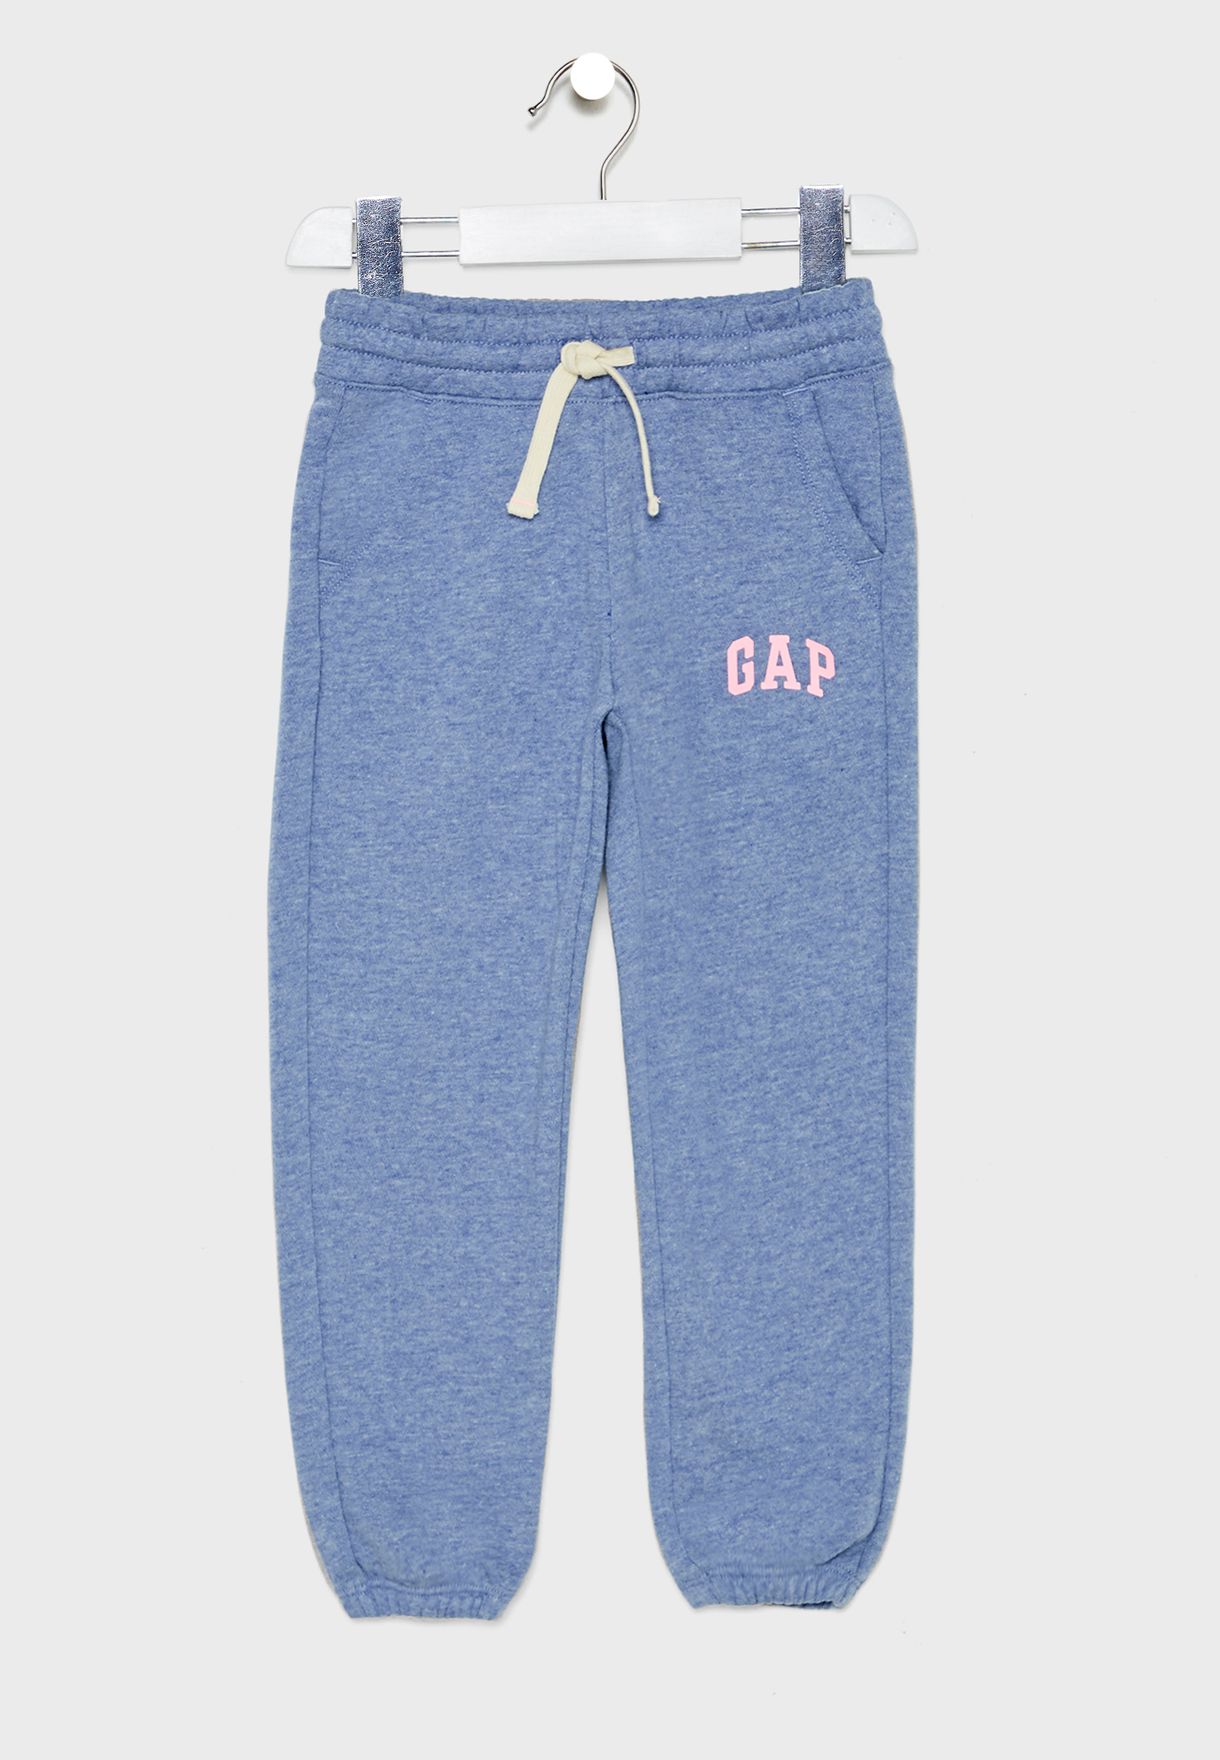 gap sweatpants